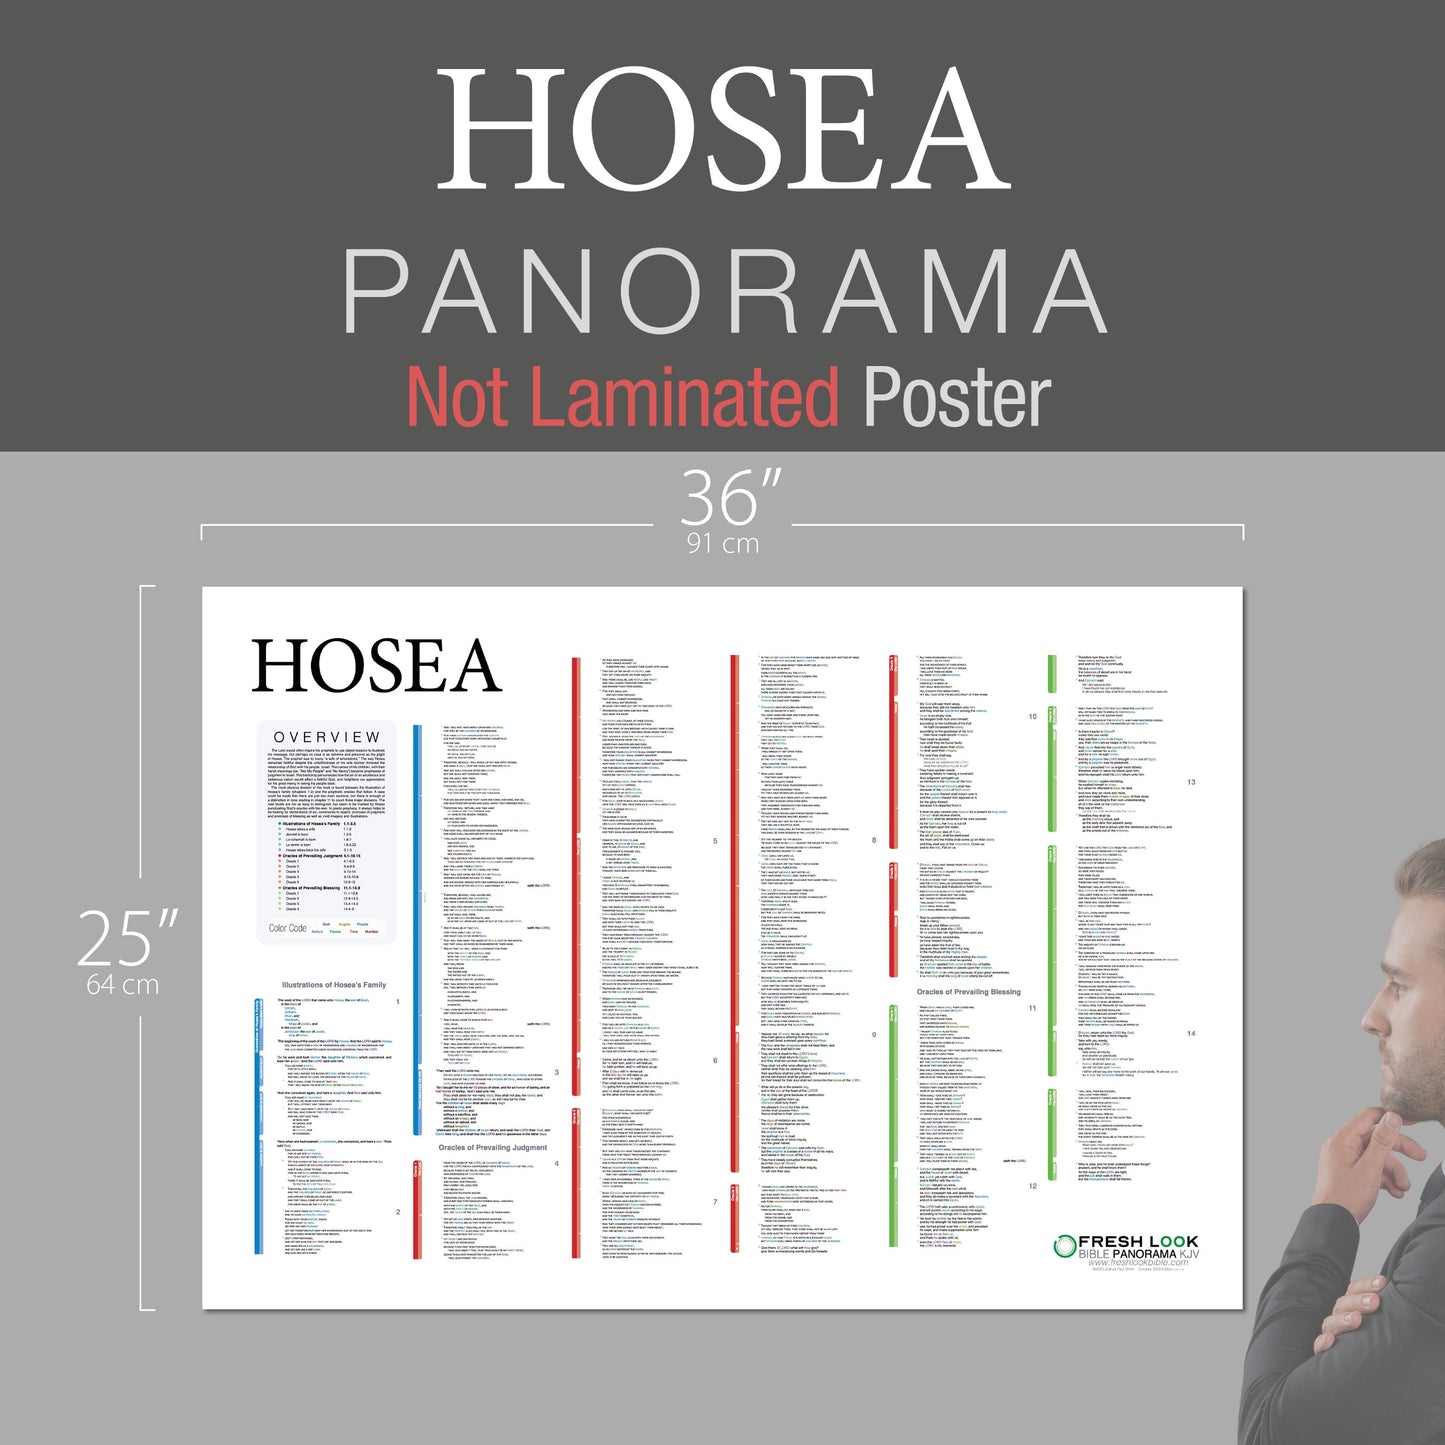 Hosea Panorama Not Laminated